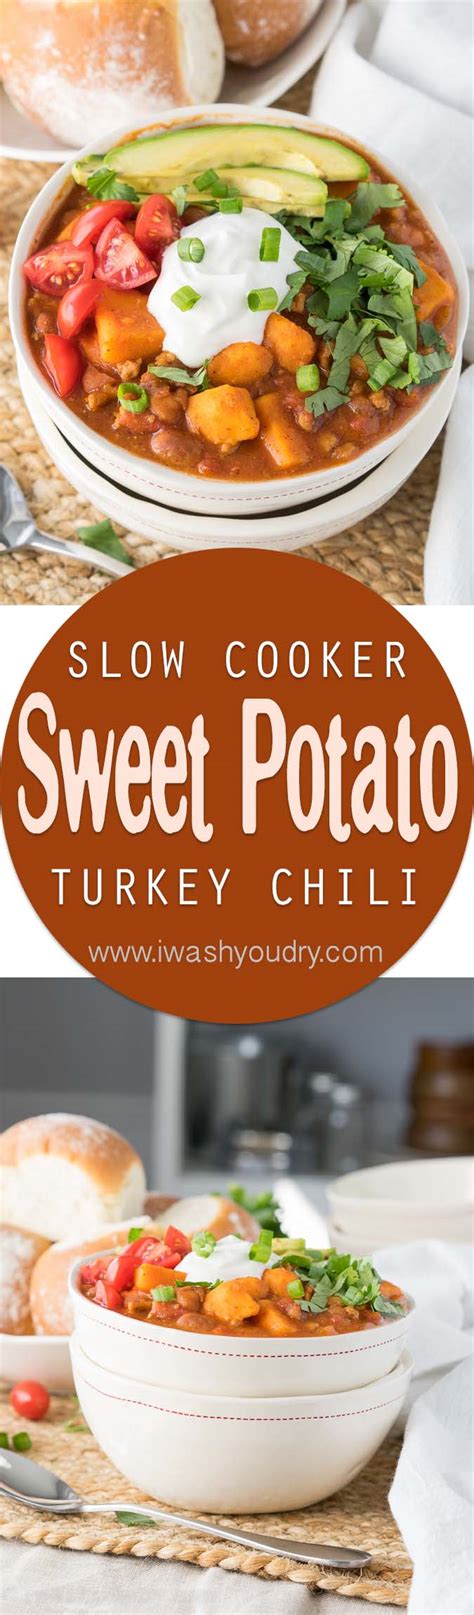 Slow Cooker Sweet Potato Turkey Chili I Wash You Dry